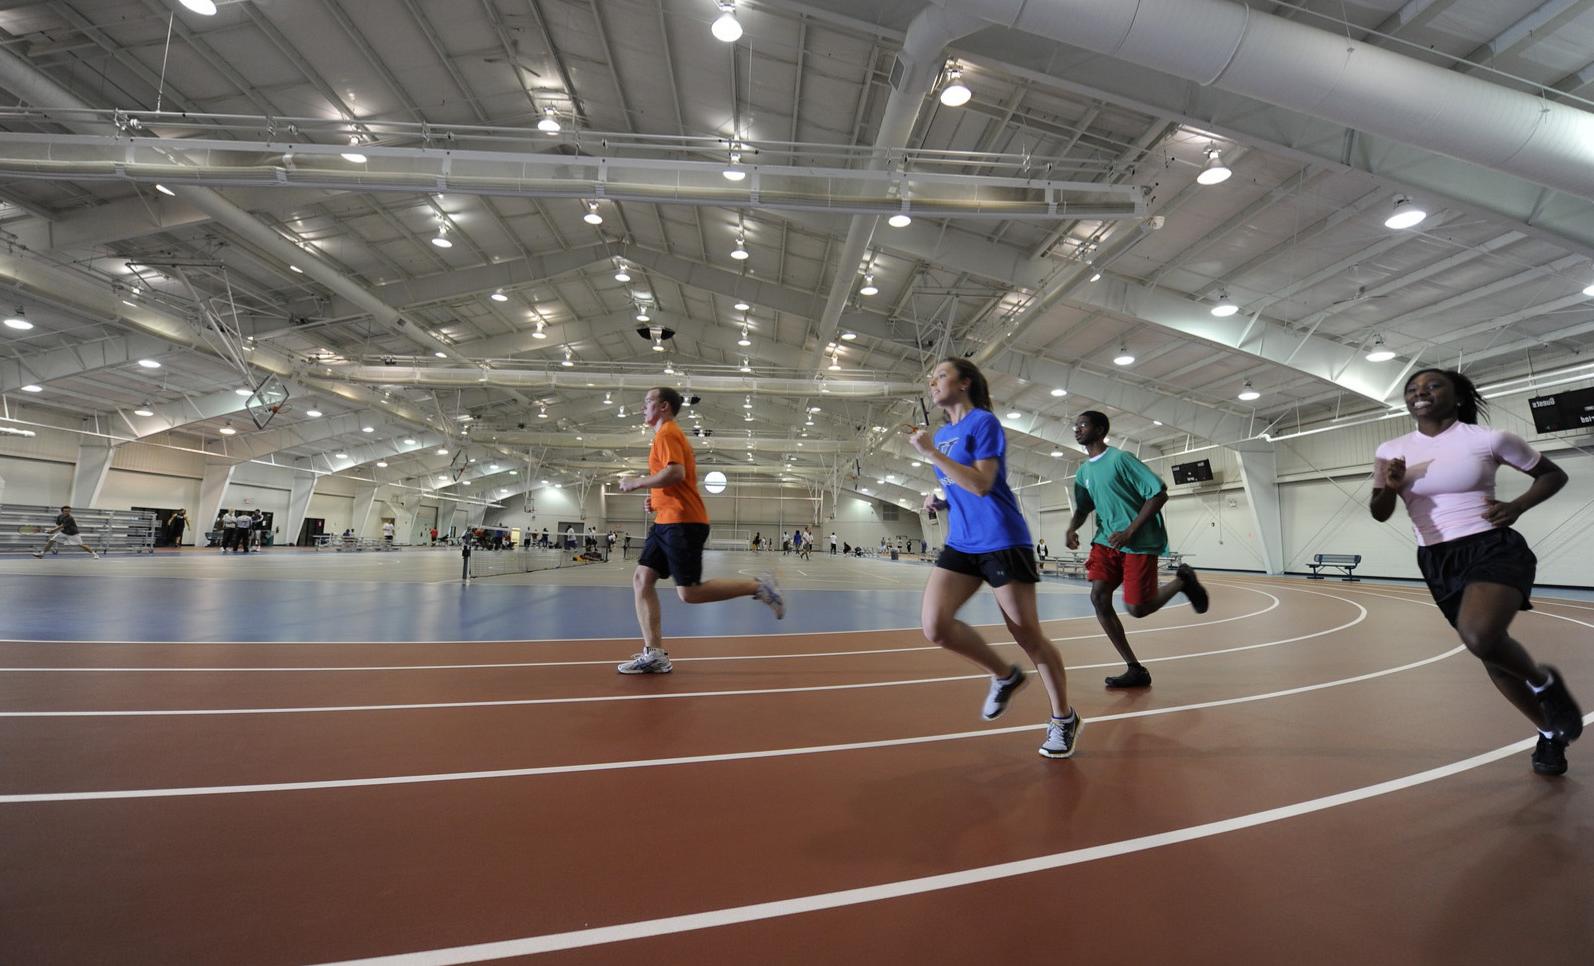 Students running around an indoor track